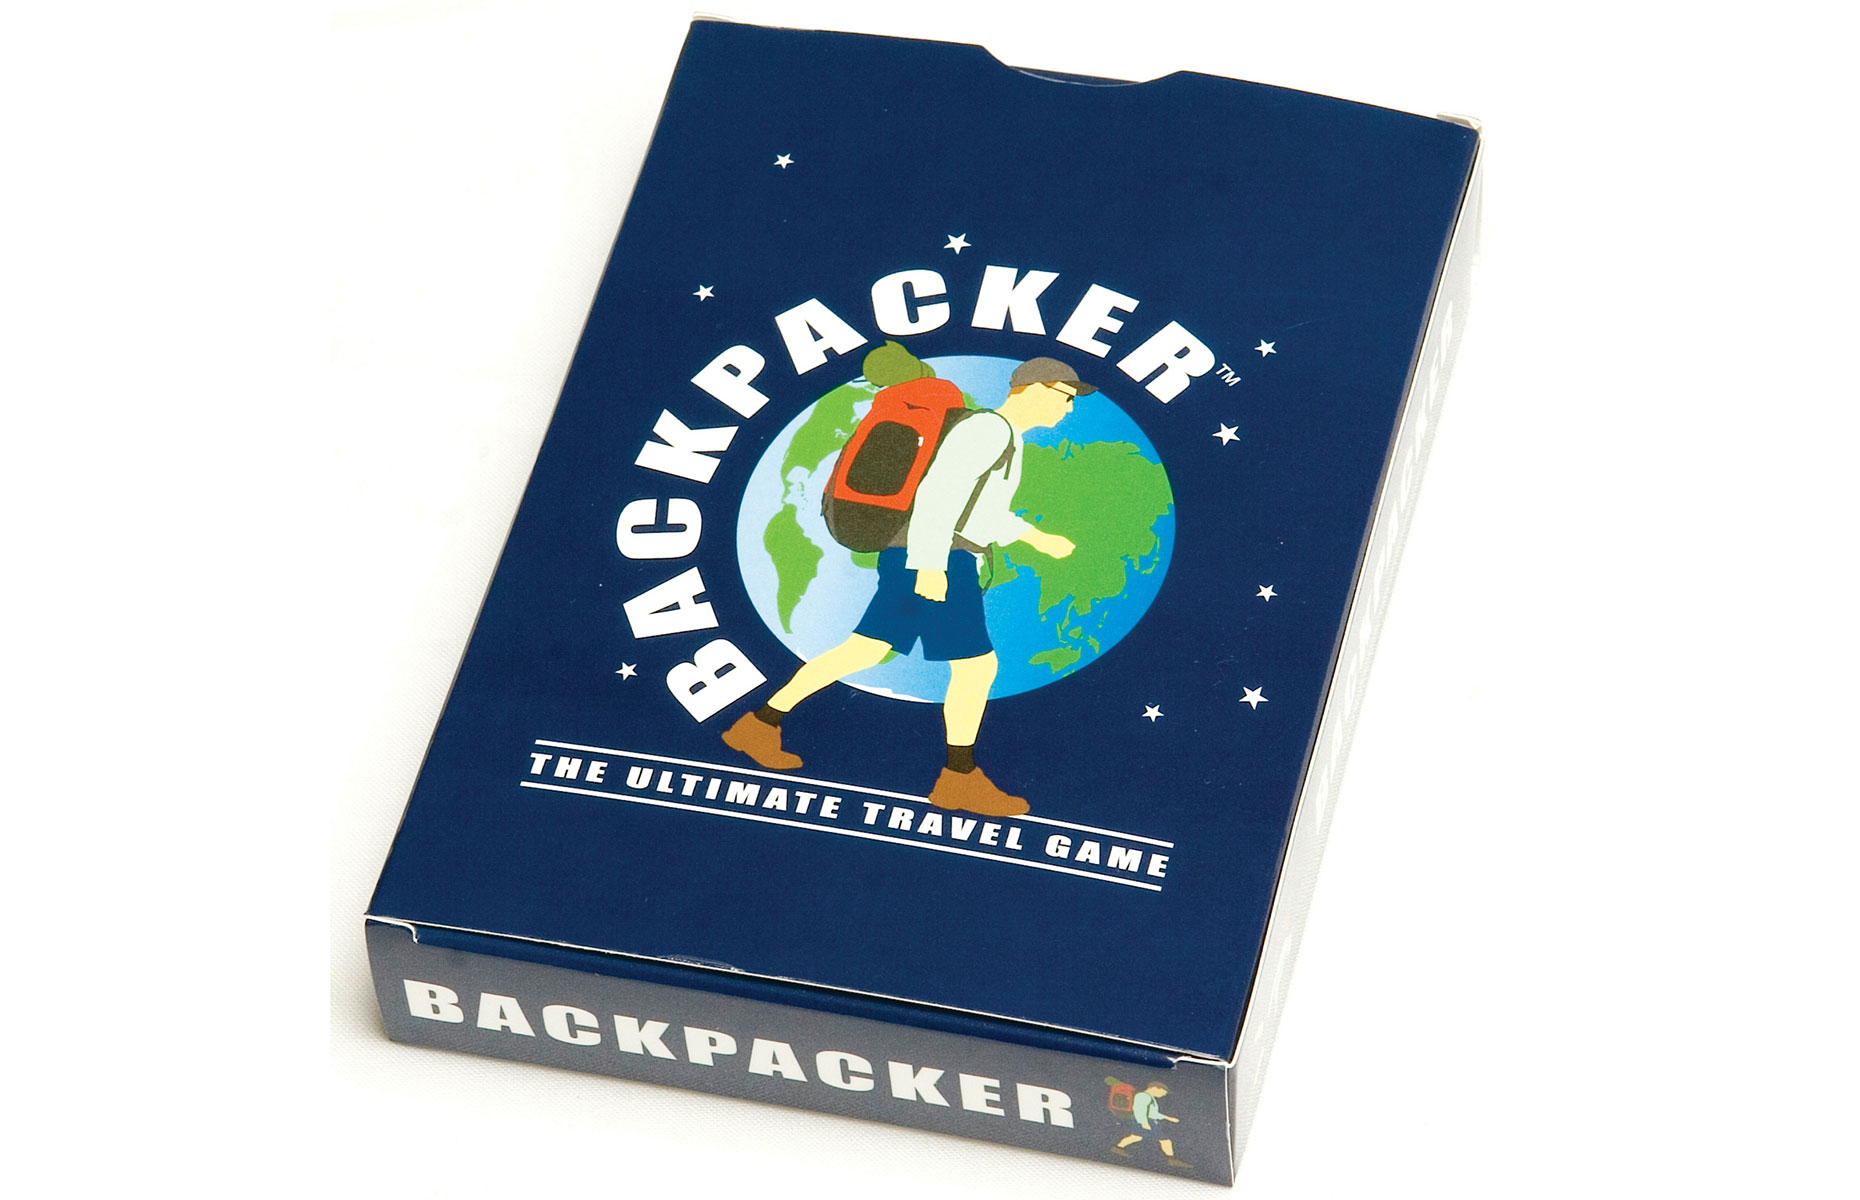 Backpacker card game (Image: Courtesy of Backpacker)